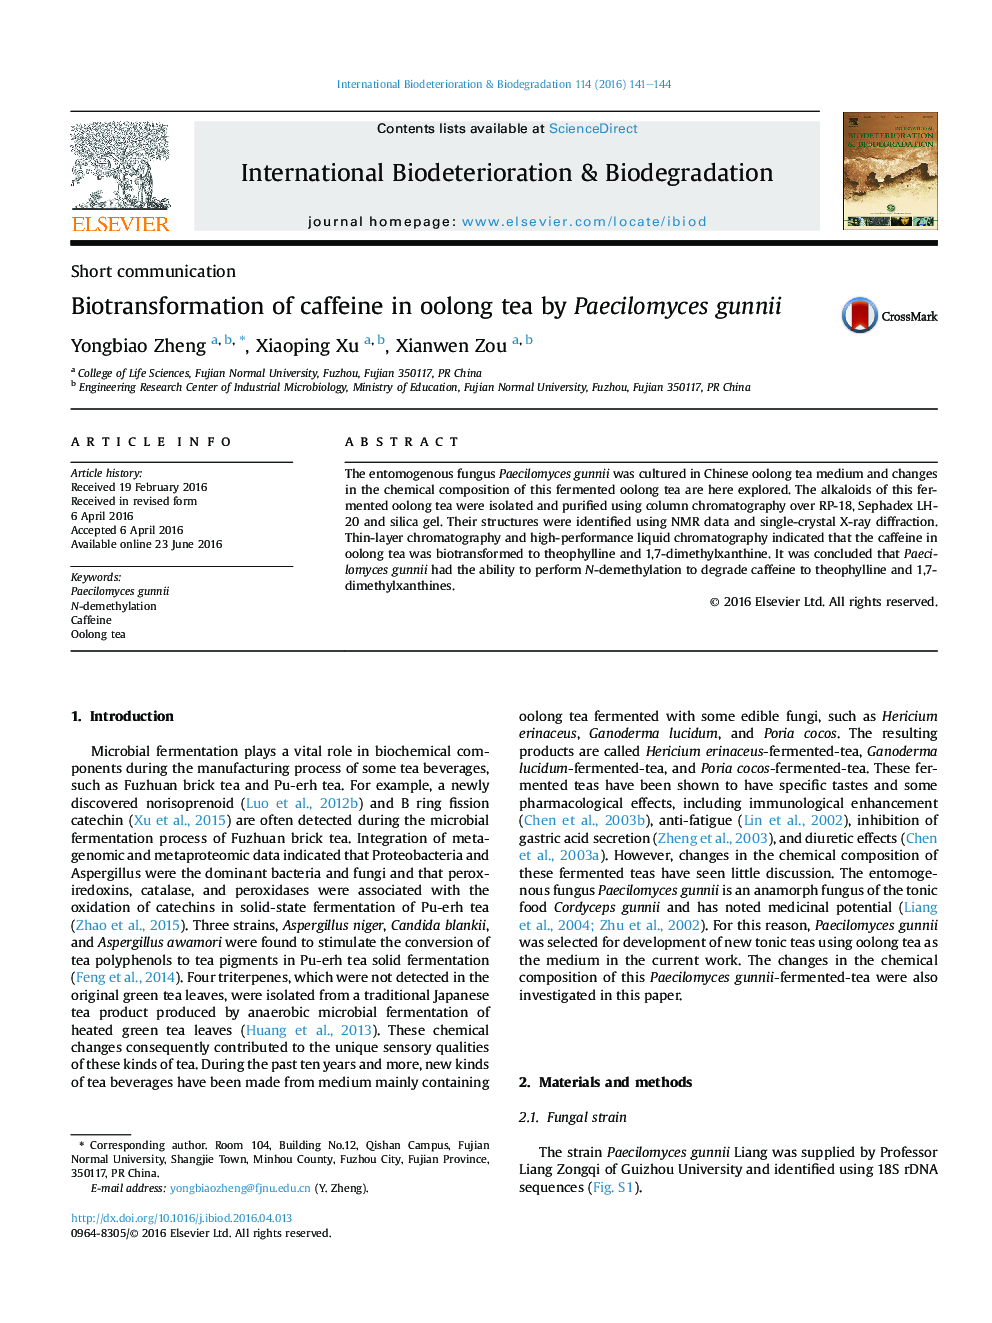 Biotransformation of caffeine in oolong tea by Paecilomyces gunnii